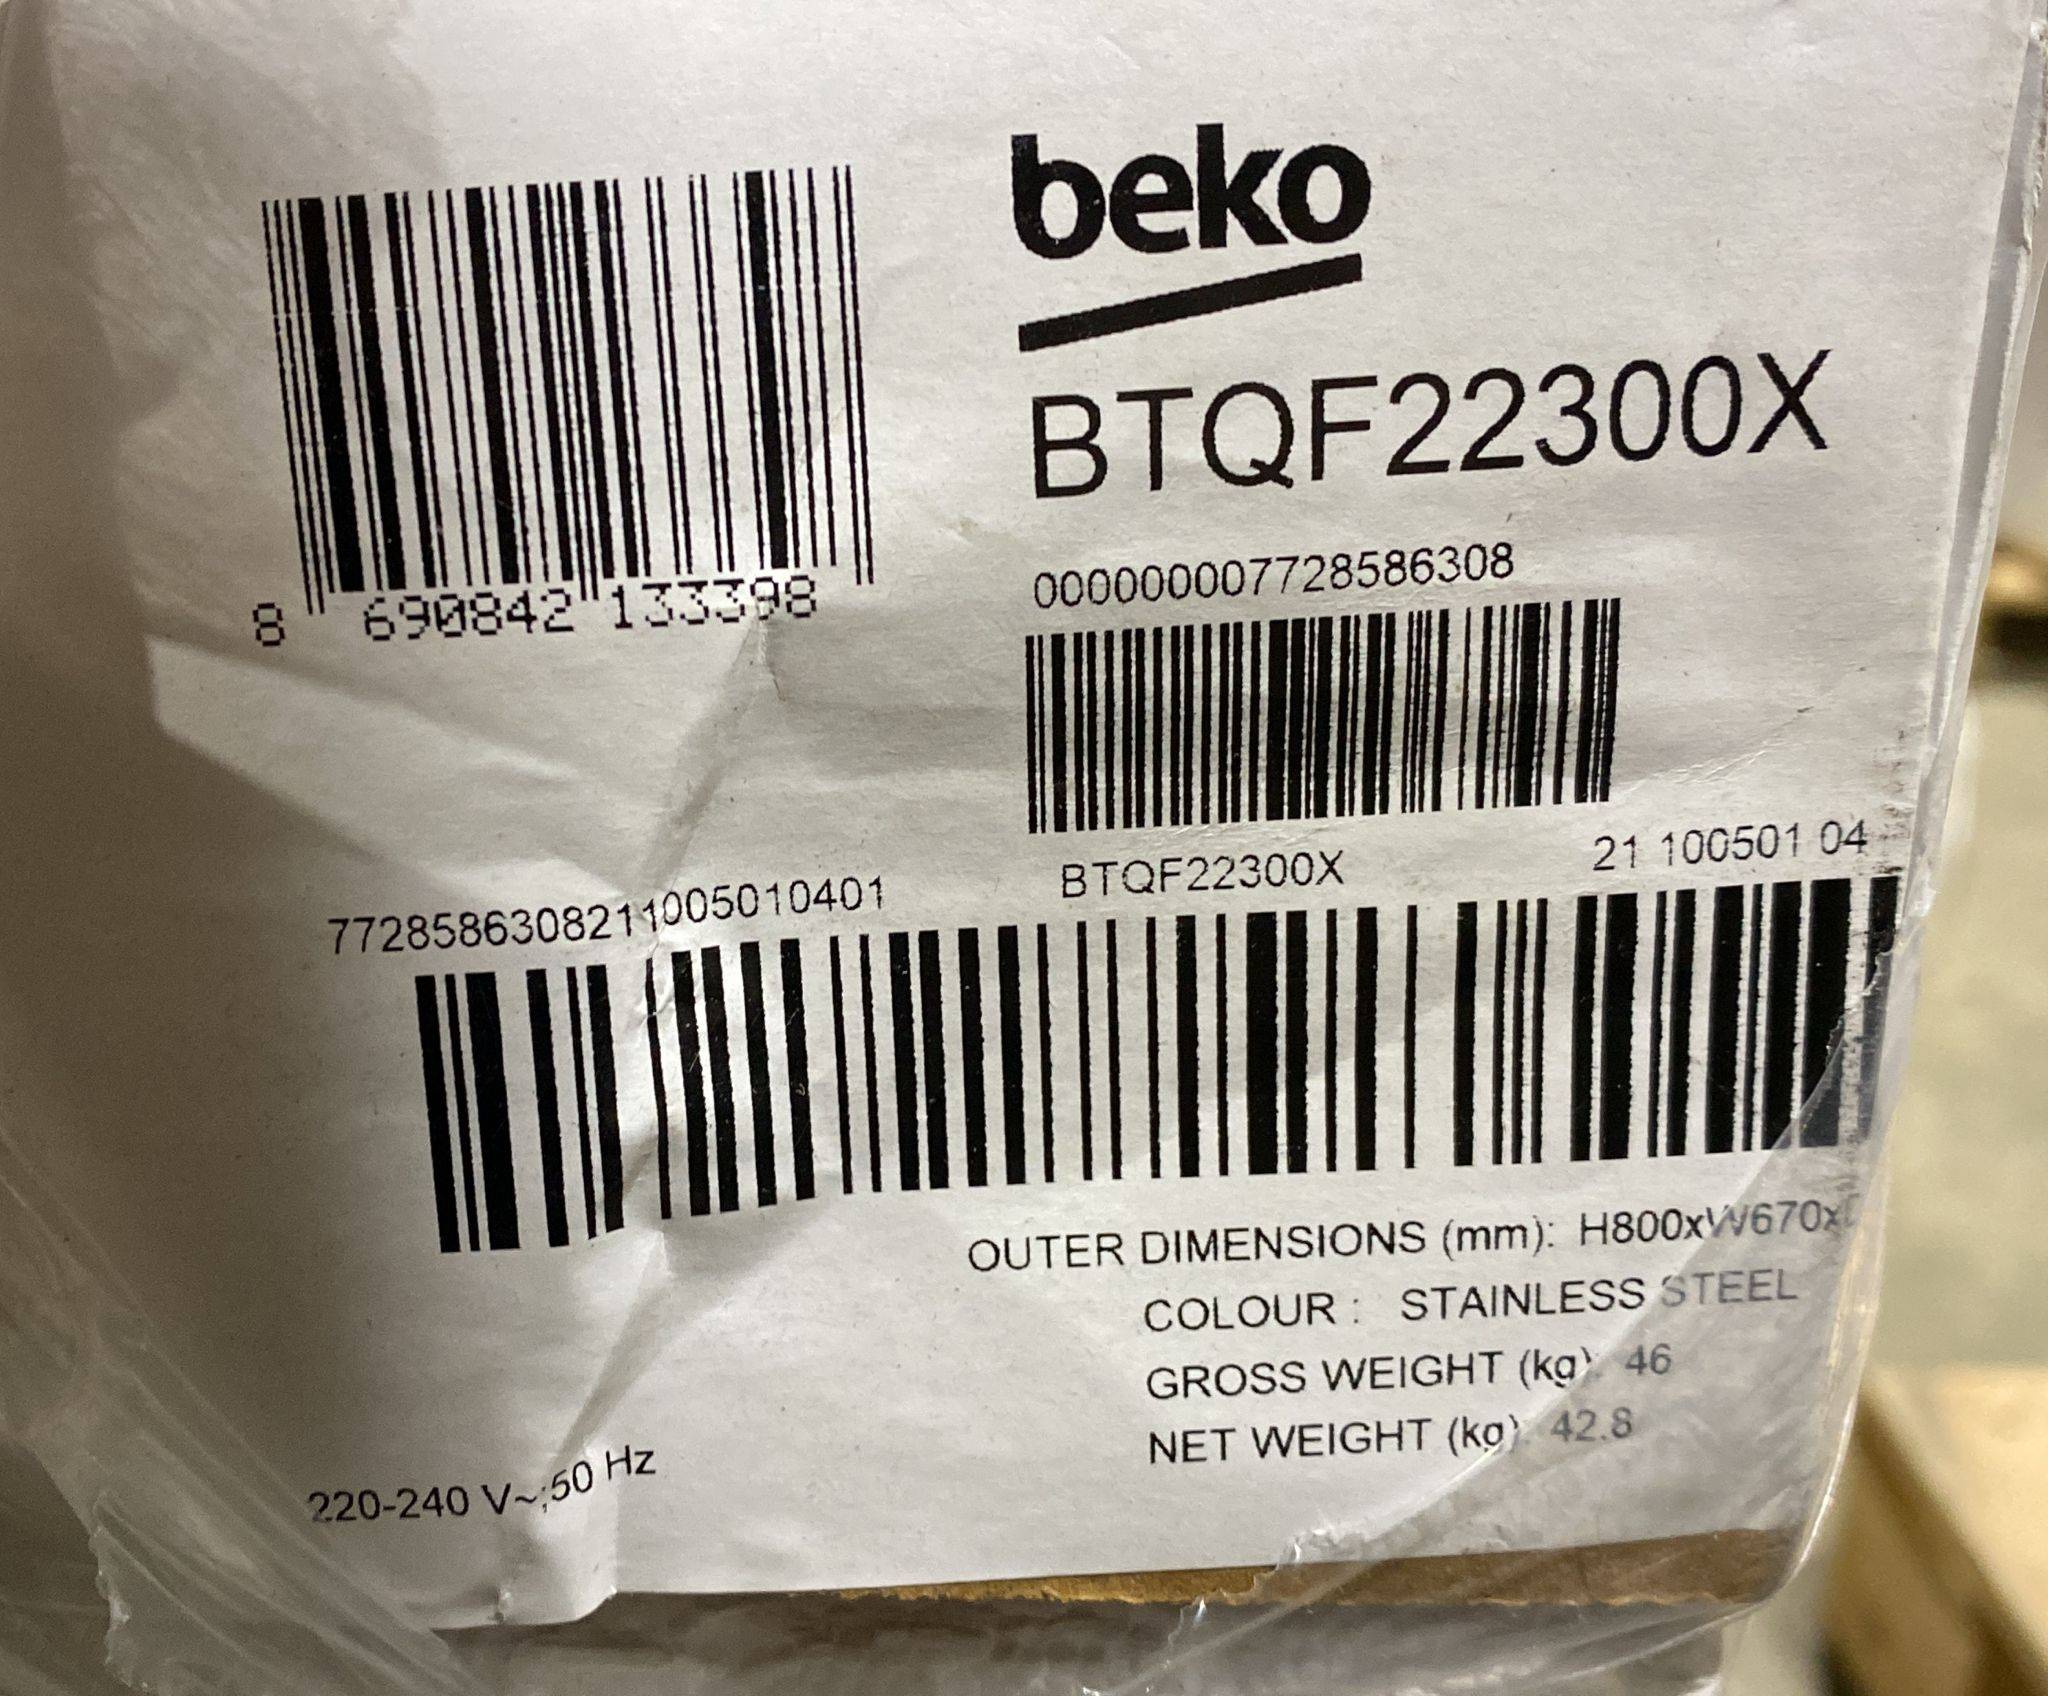 Beko BTQF22300X Stainless steel Built-Under Double oven 72cm 3398